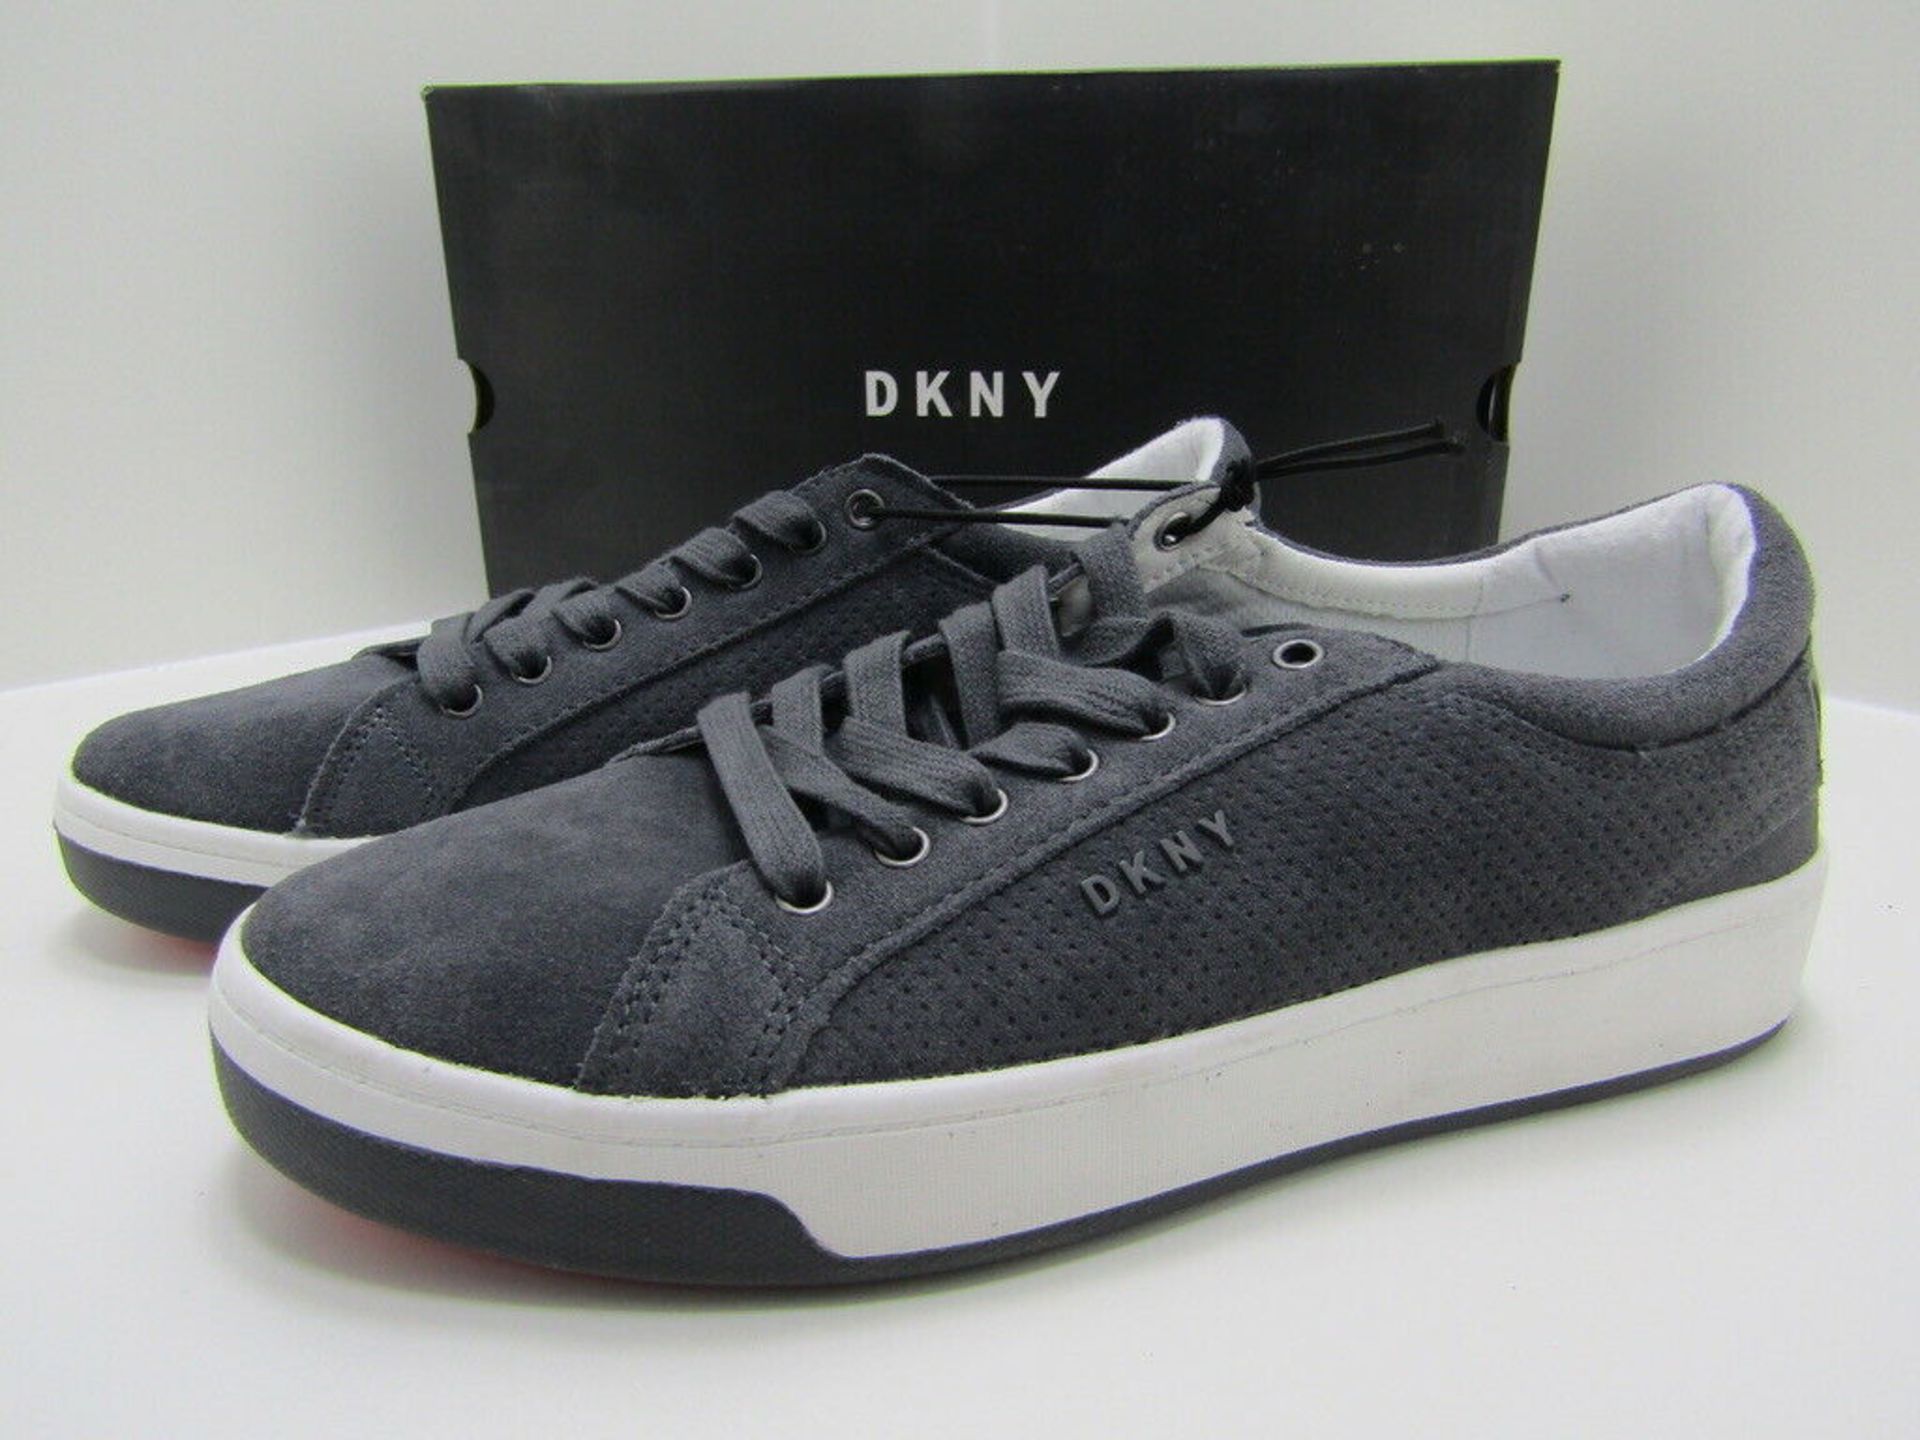 1 Pair of DKNY Samson Deck Shows. Grey. UK Size 7